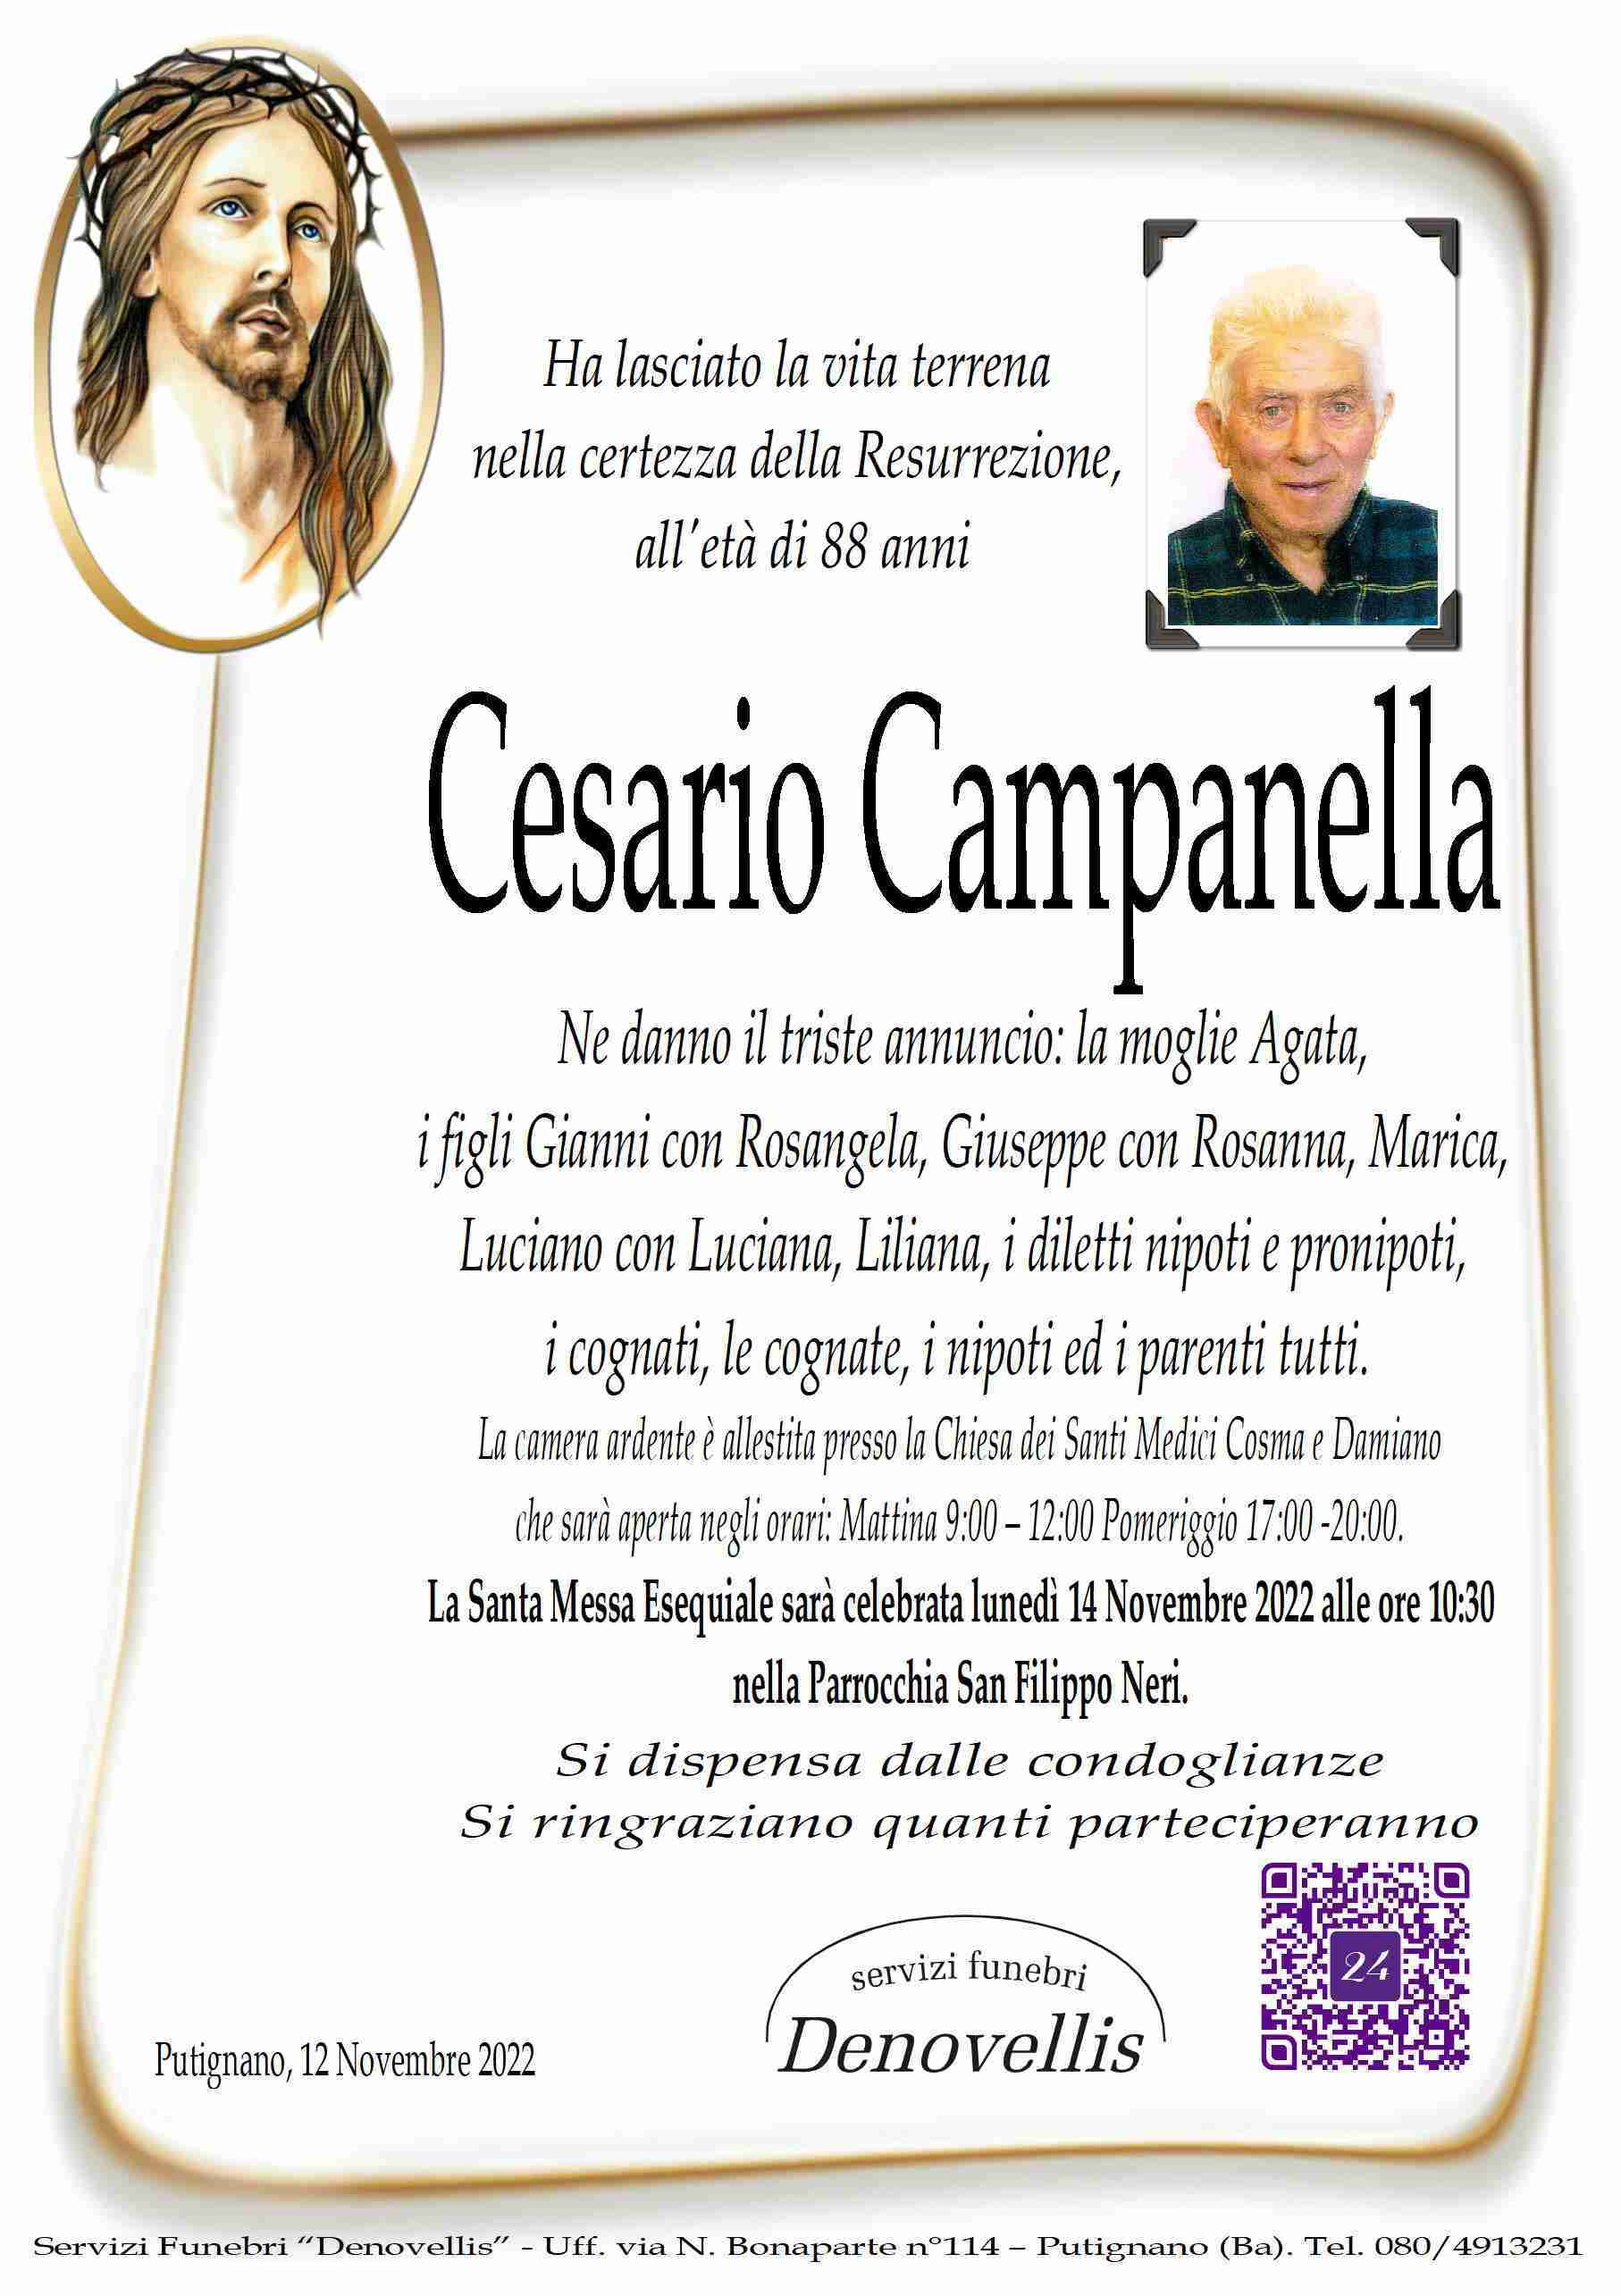 Cesario Campanella